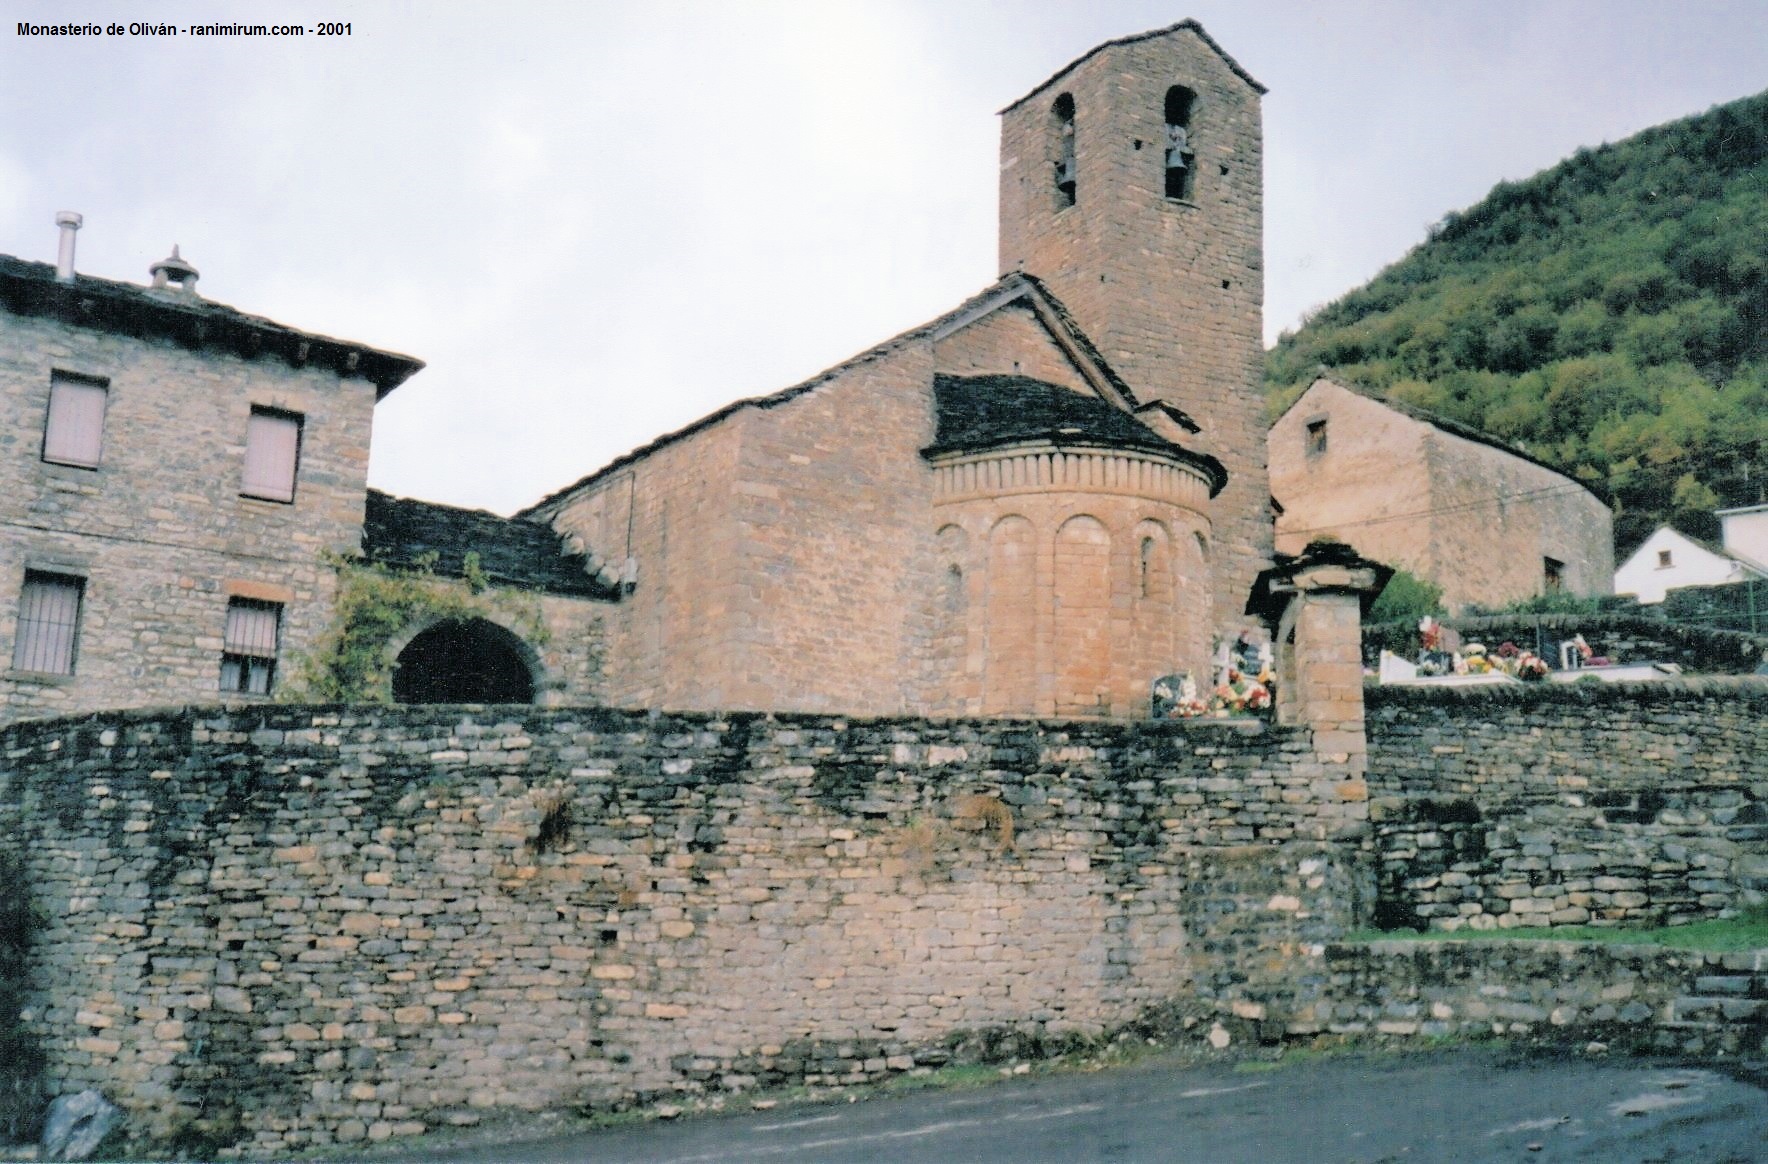 Monasterio de Olivan